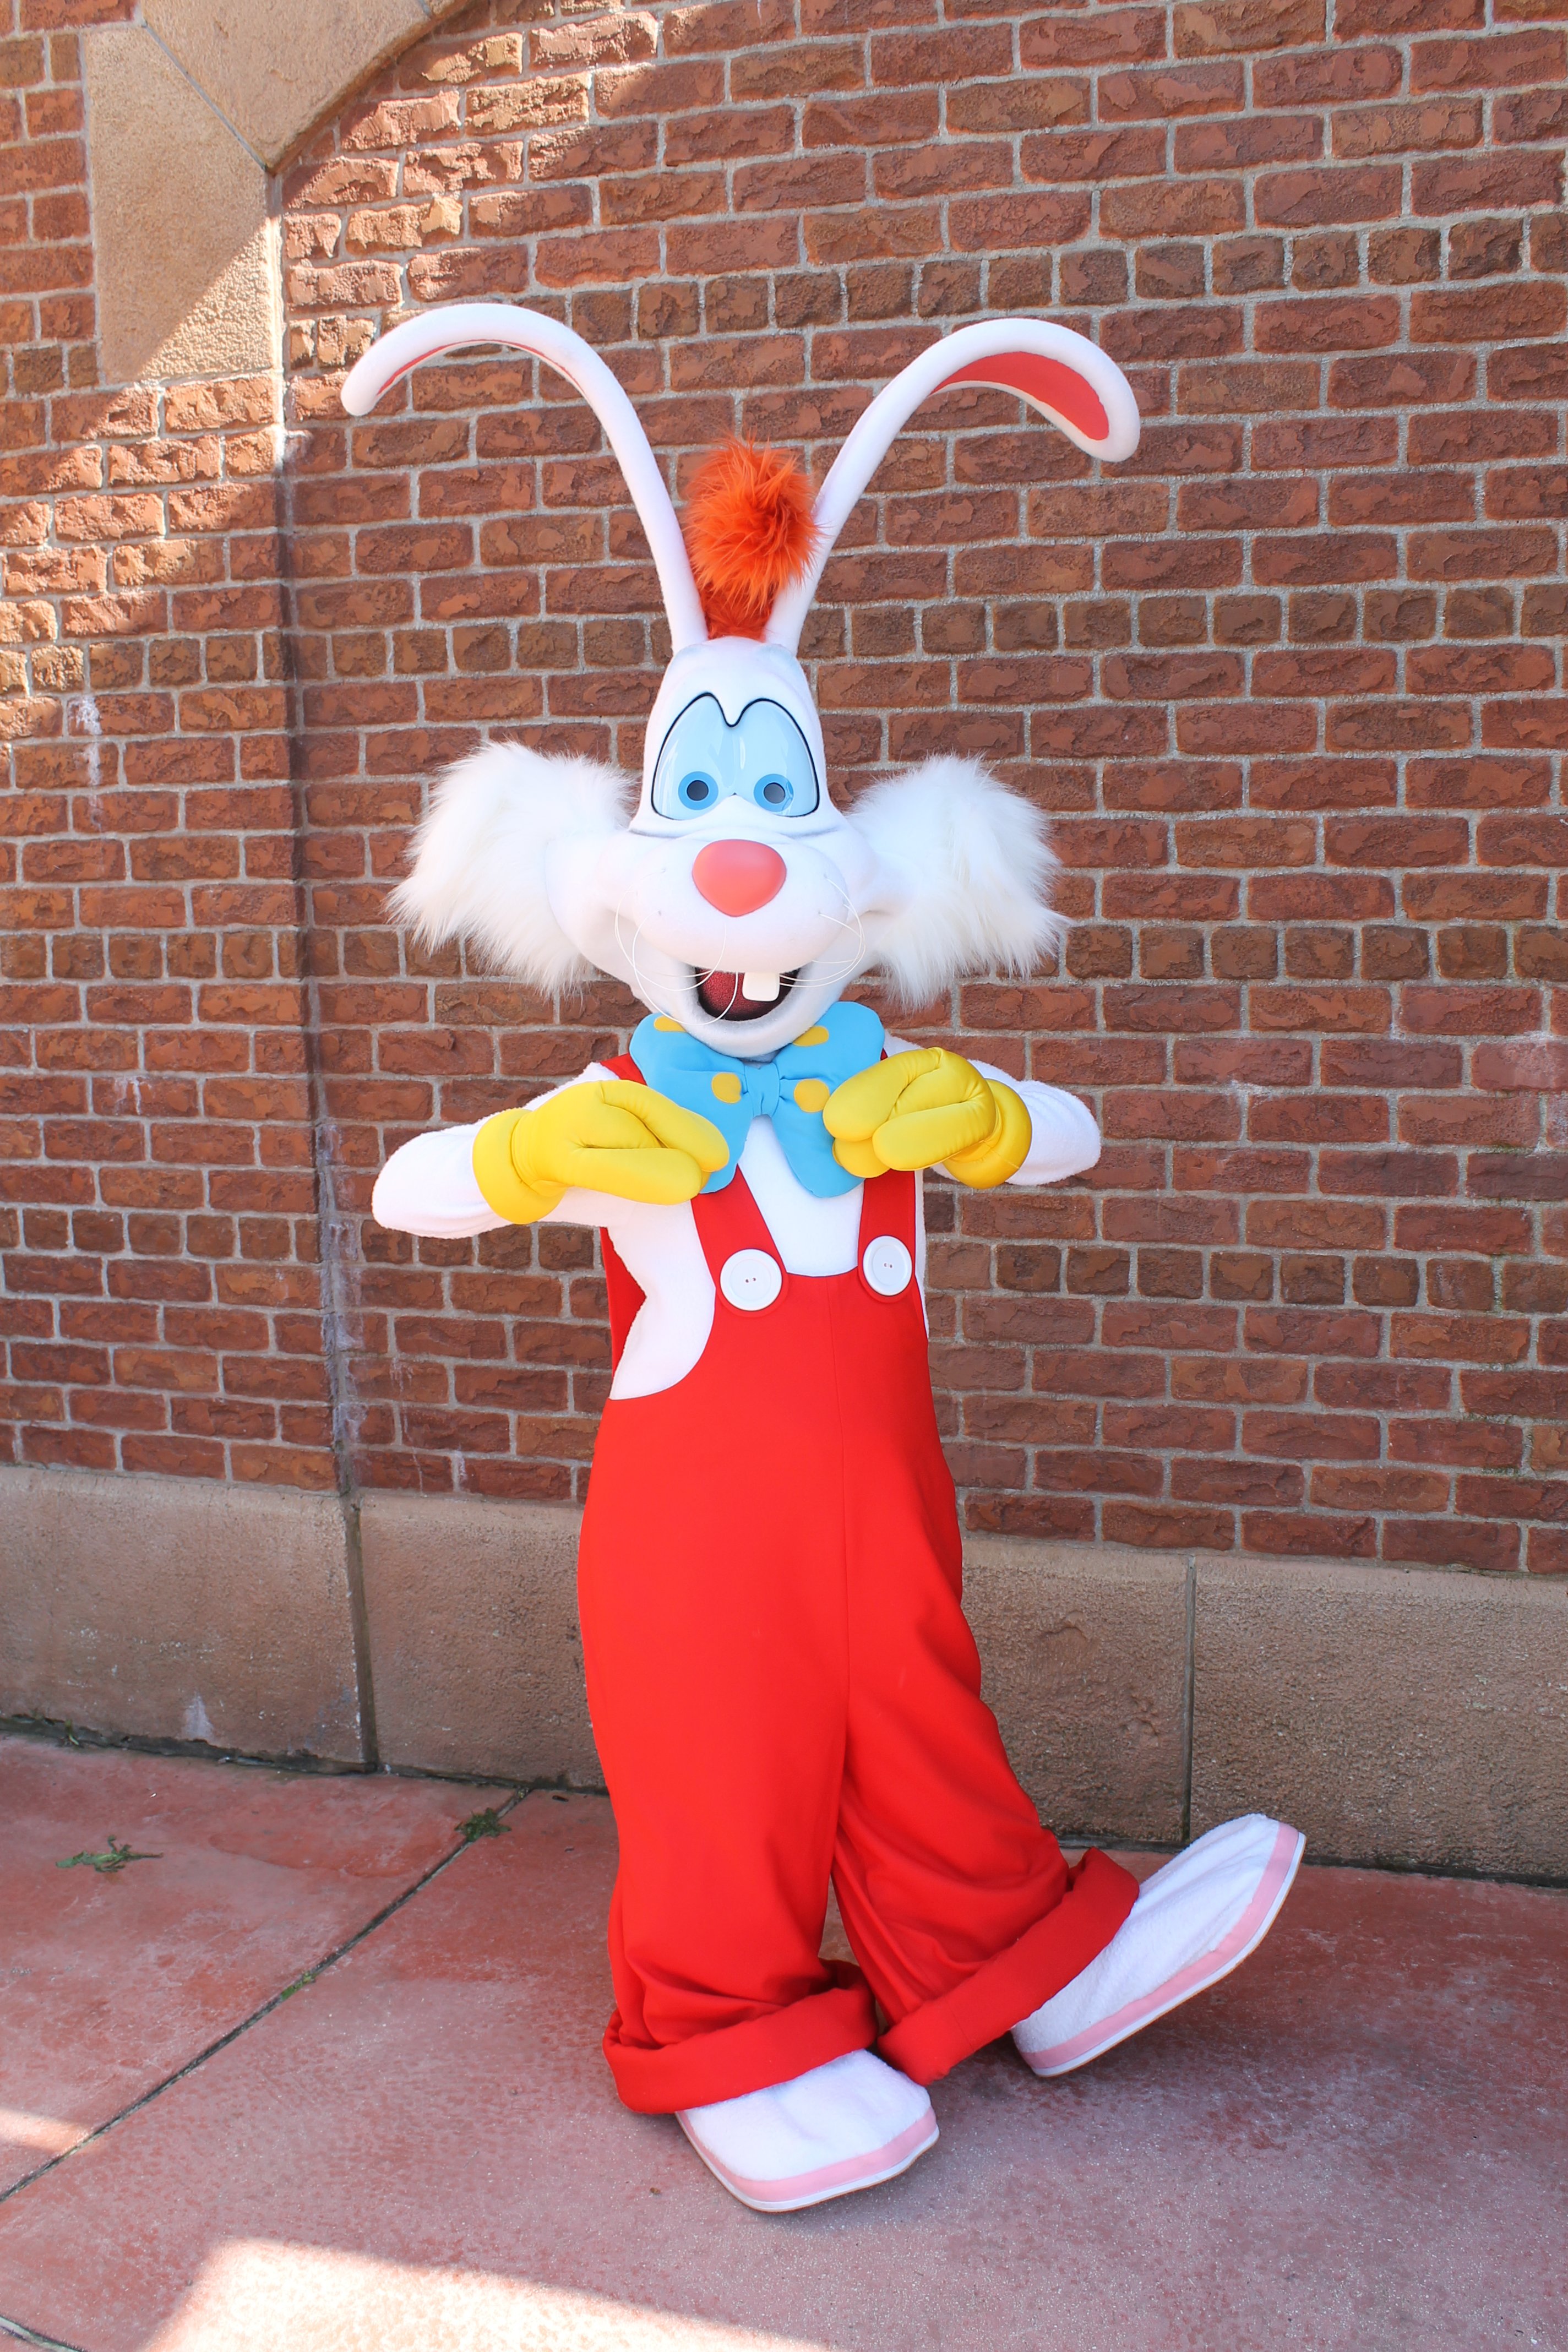 Roger Rabbit character meet and greet at Disneyland Paris